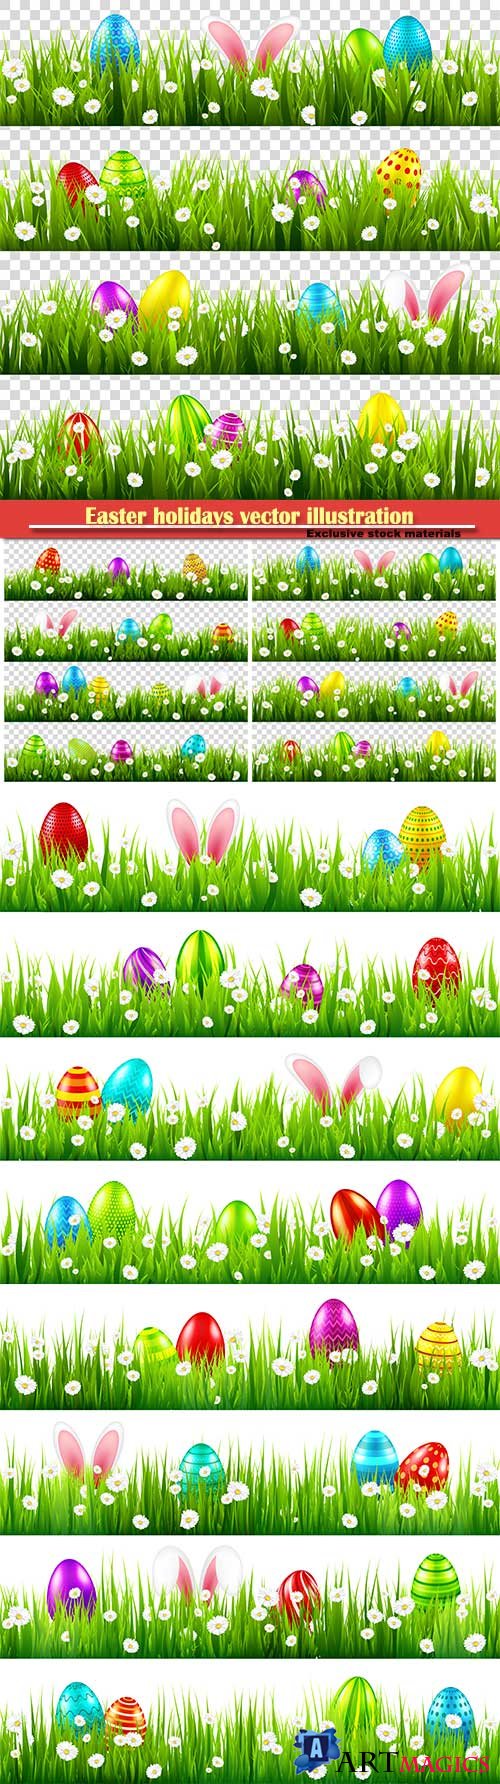 Easter holidays vector illustration